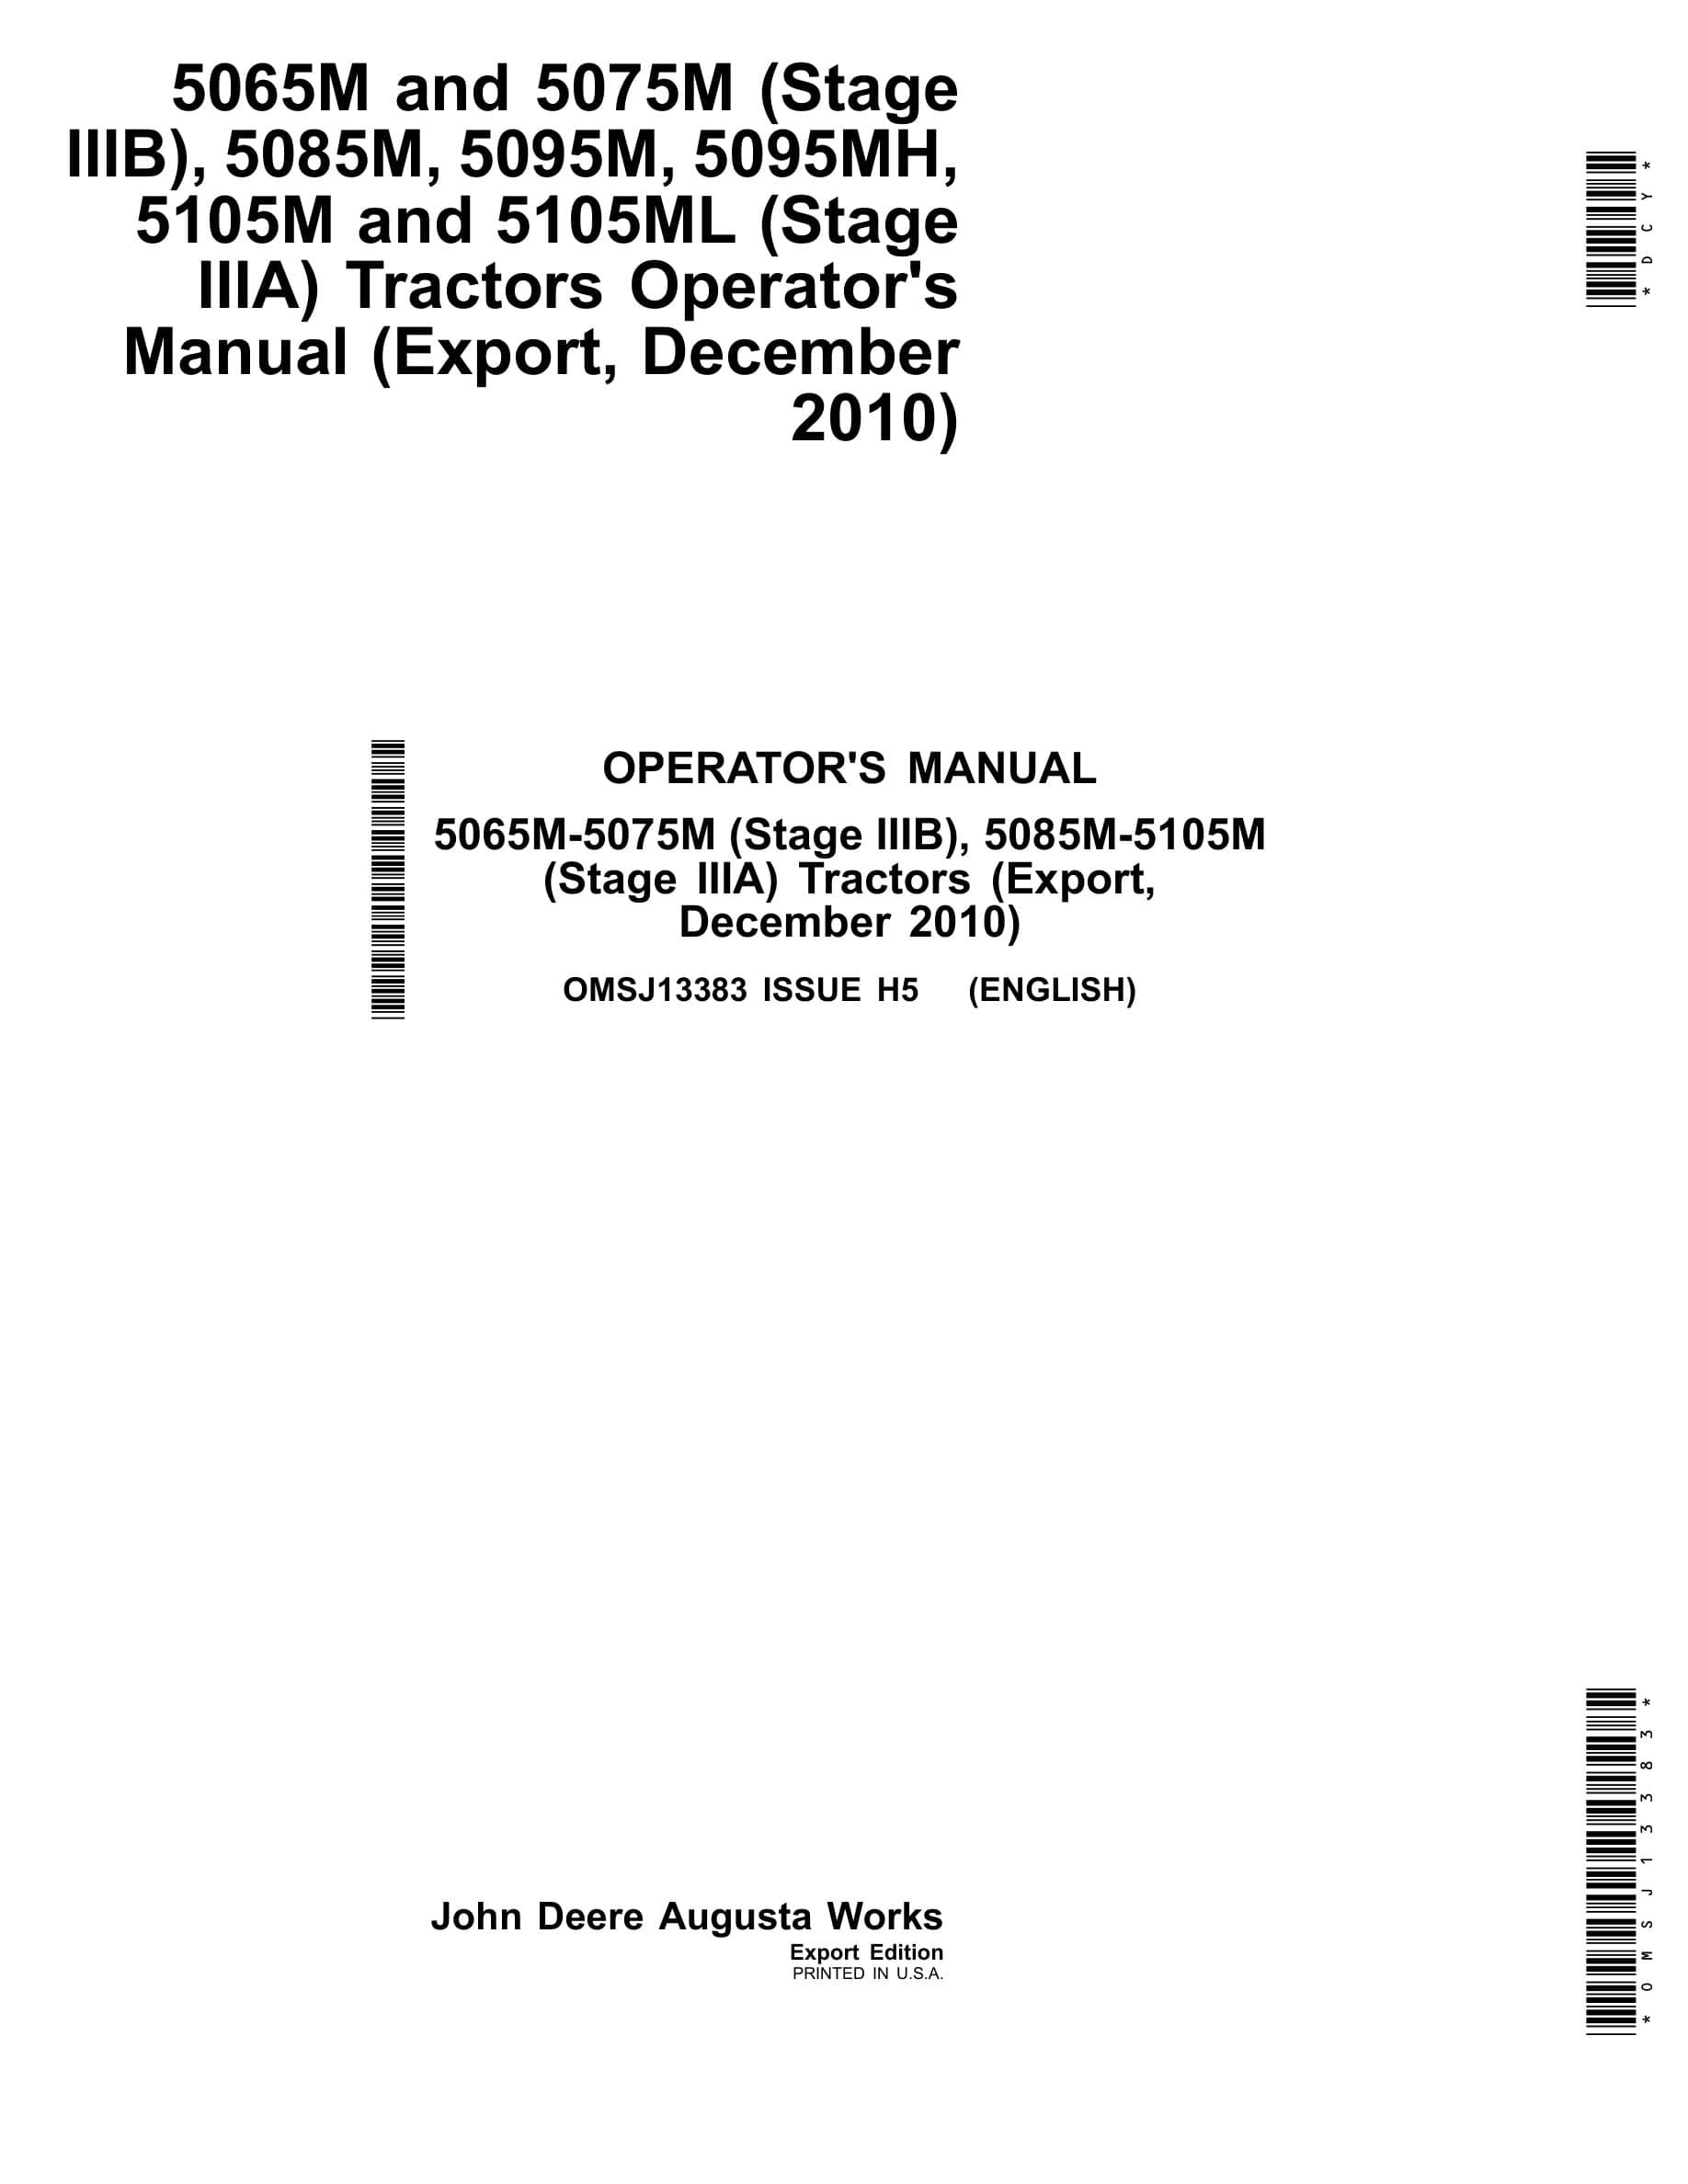 John Deere 5065m-5075m (stage Iiib), 5085m-5105m (stage Iiia) Tractors Operator Manuals OMSJ13383-1